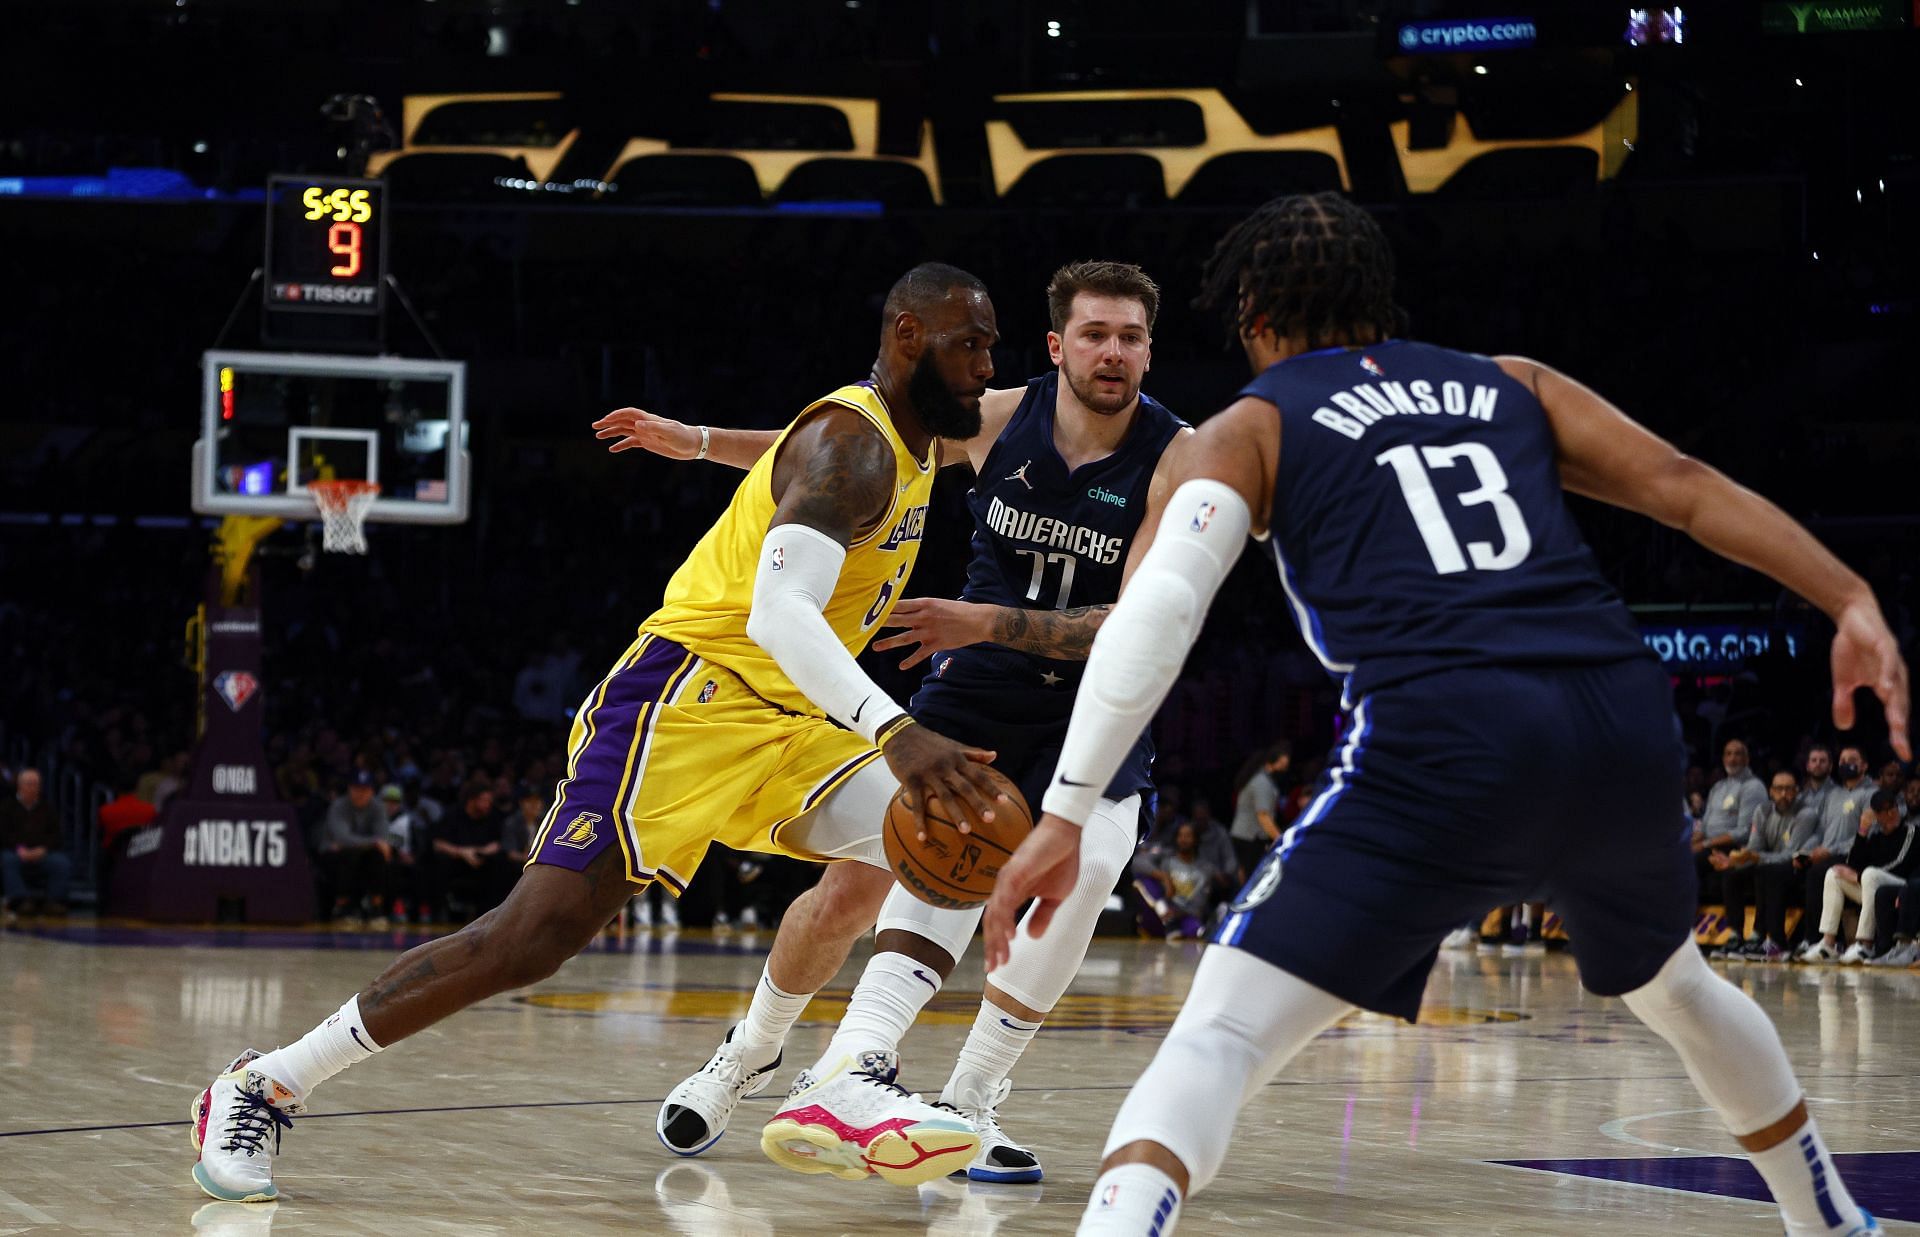 Enter caption Dallas Mavericks vs. LA Lakers: LeBron James drives between defenders.